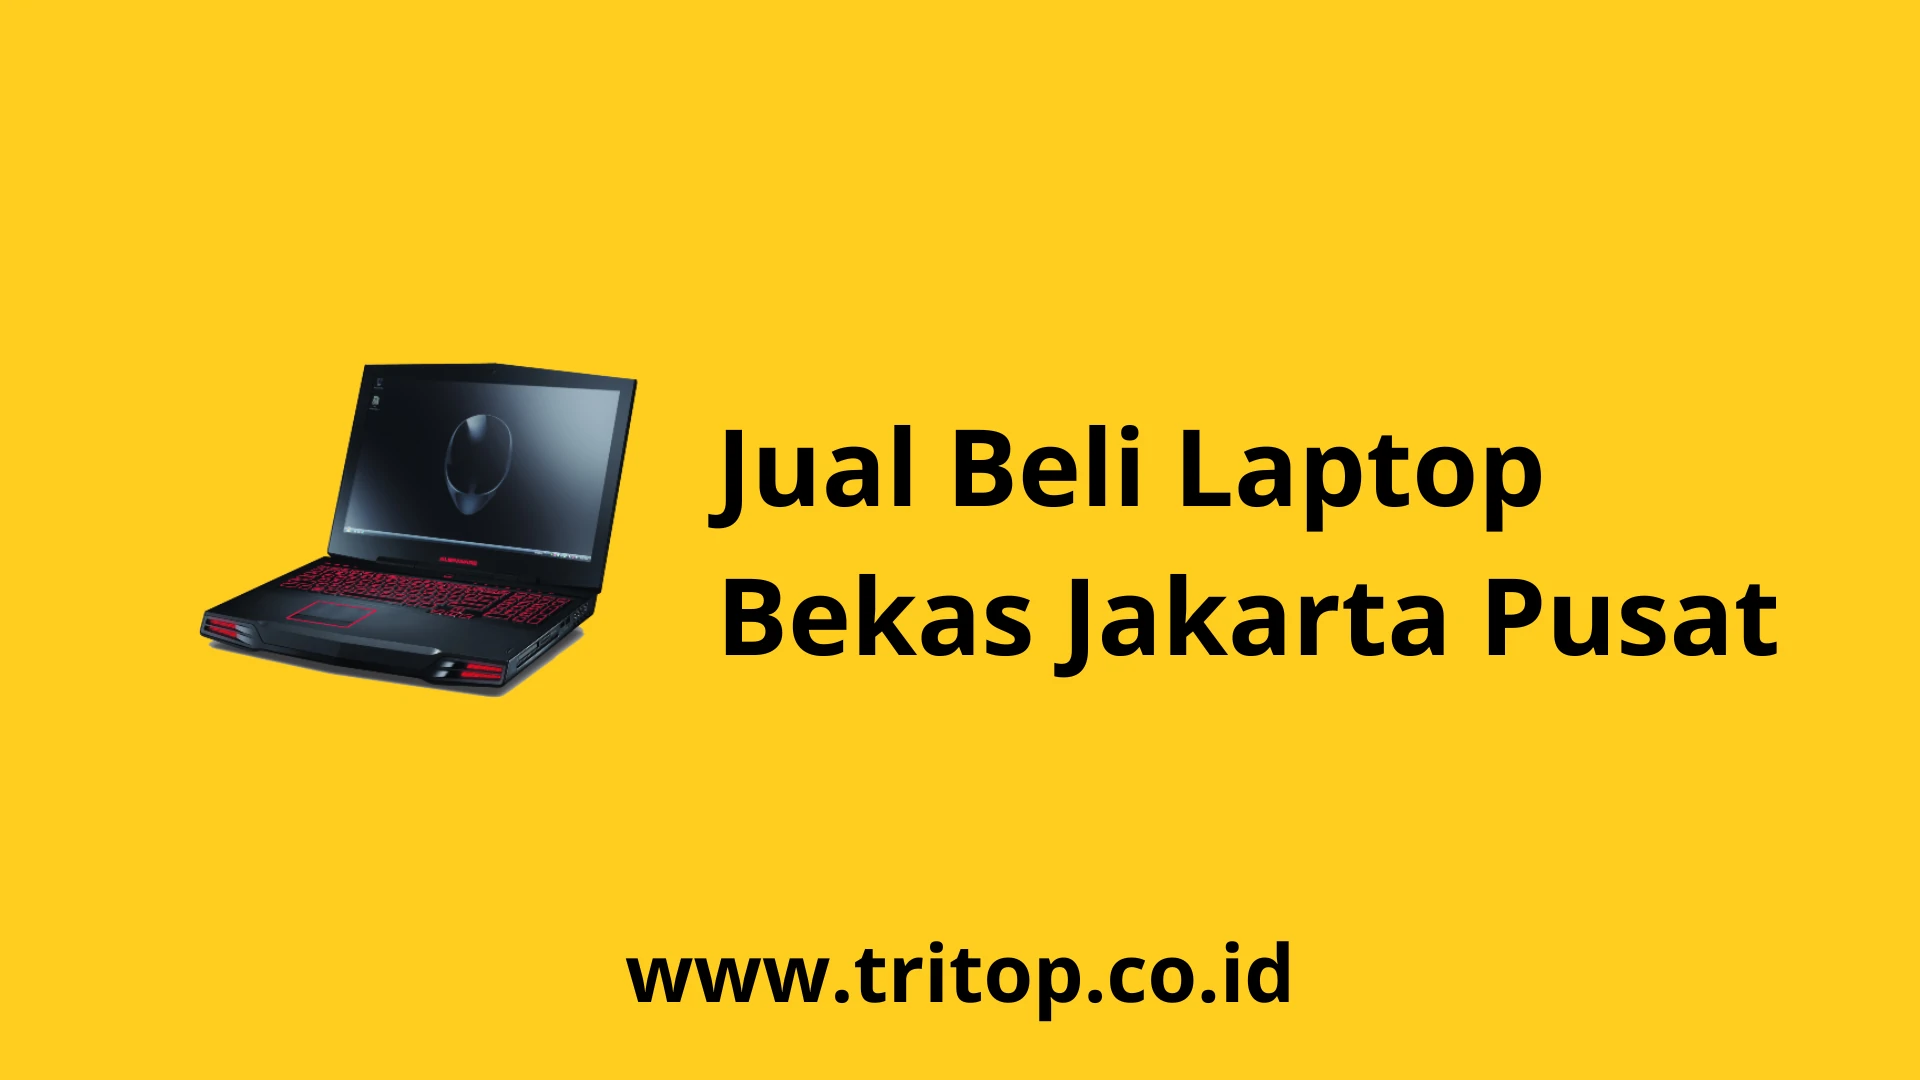 Jual Beli Laptop Bekas Jakarta Pusat